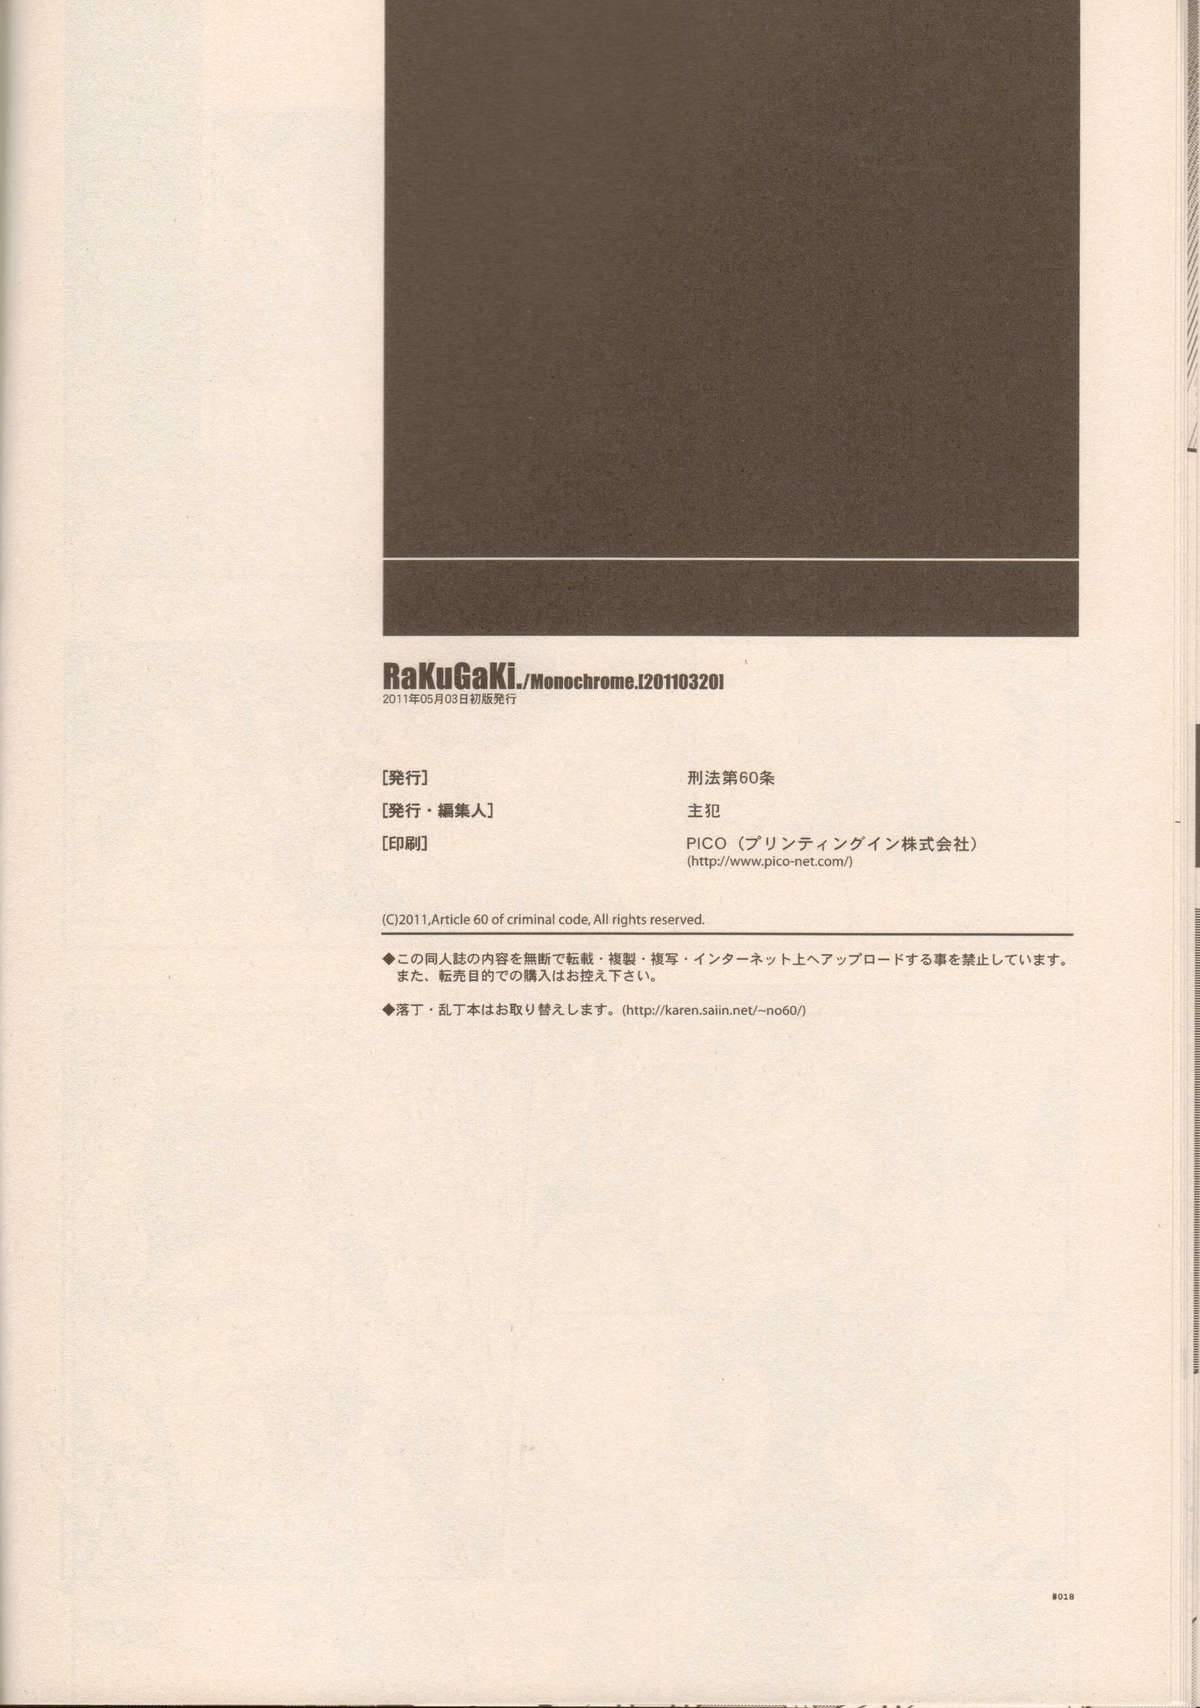 (SUPER20) [刑法第60条 (主犯)] RaKuGaKi./Monochrome.[20110320] (よろず)